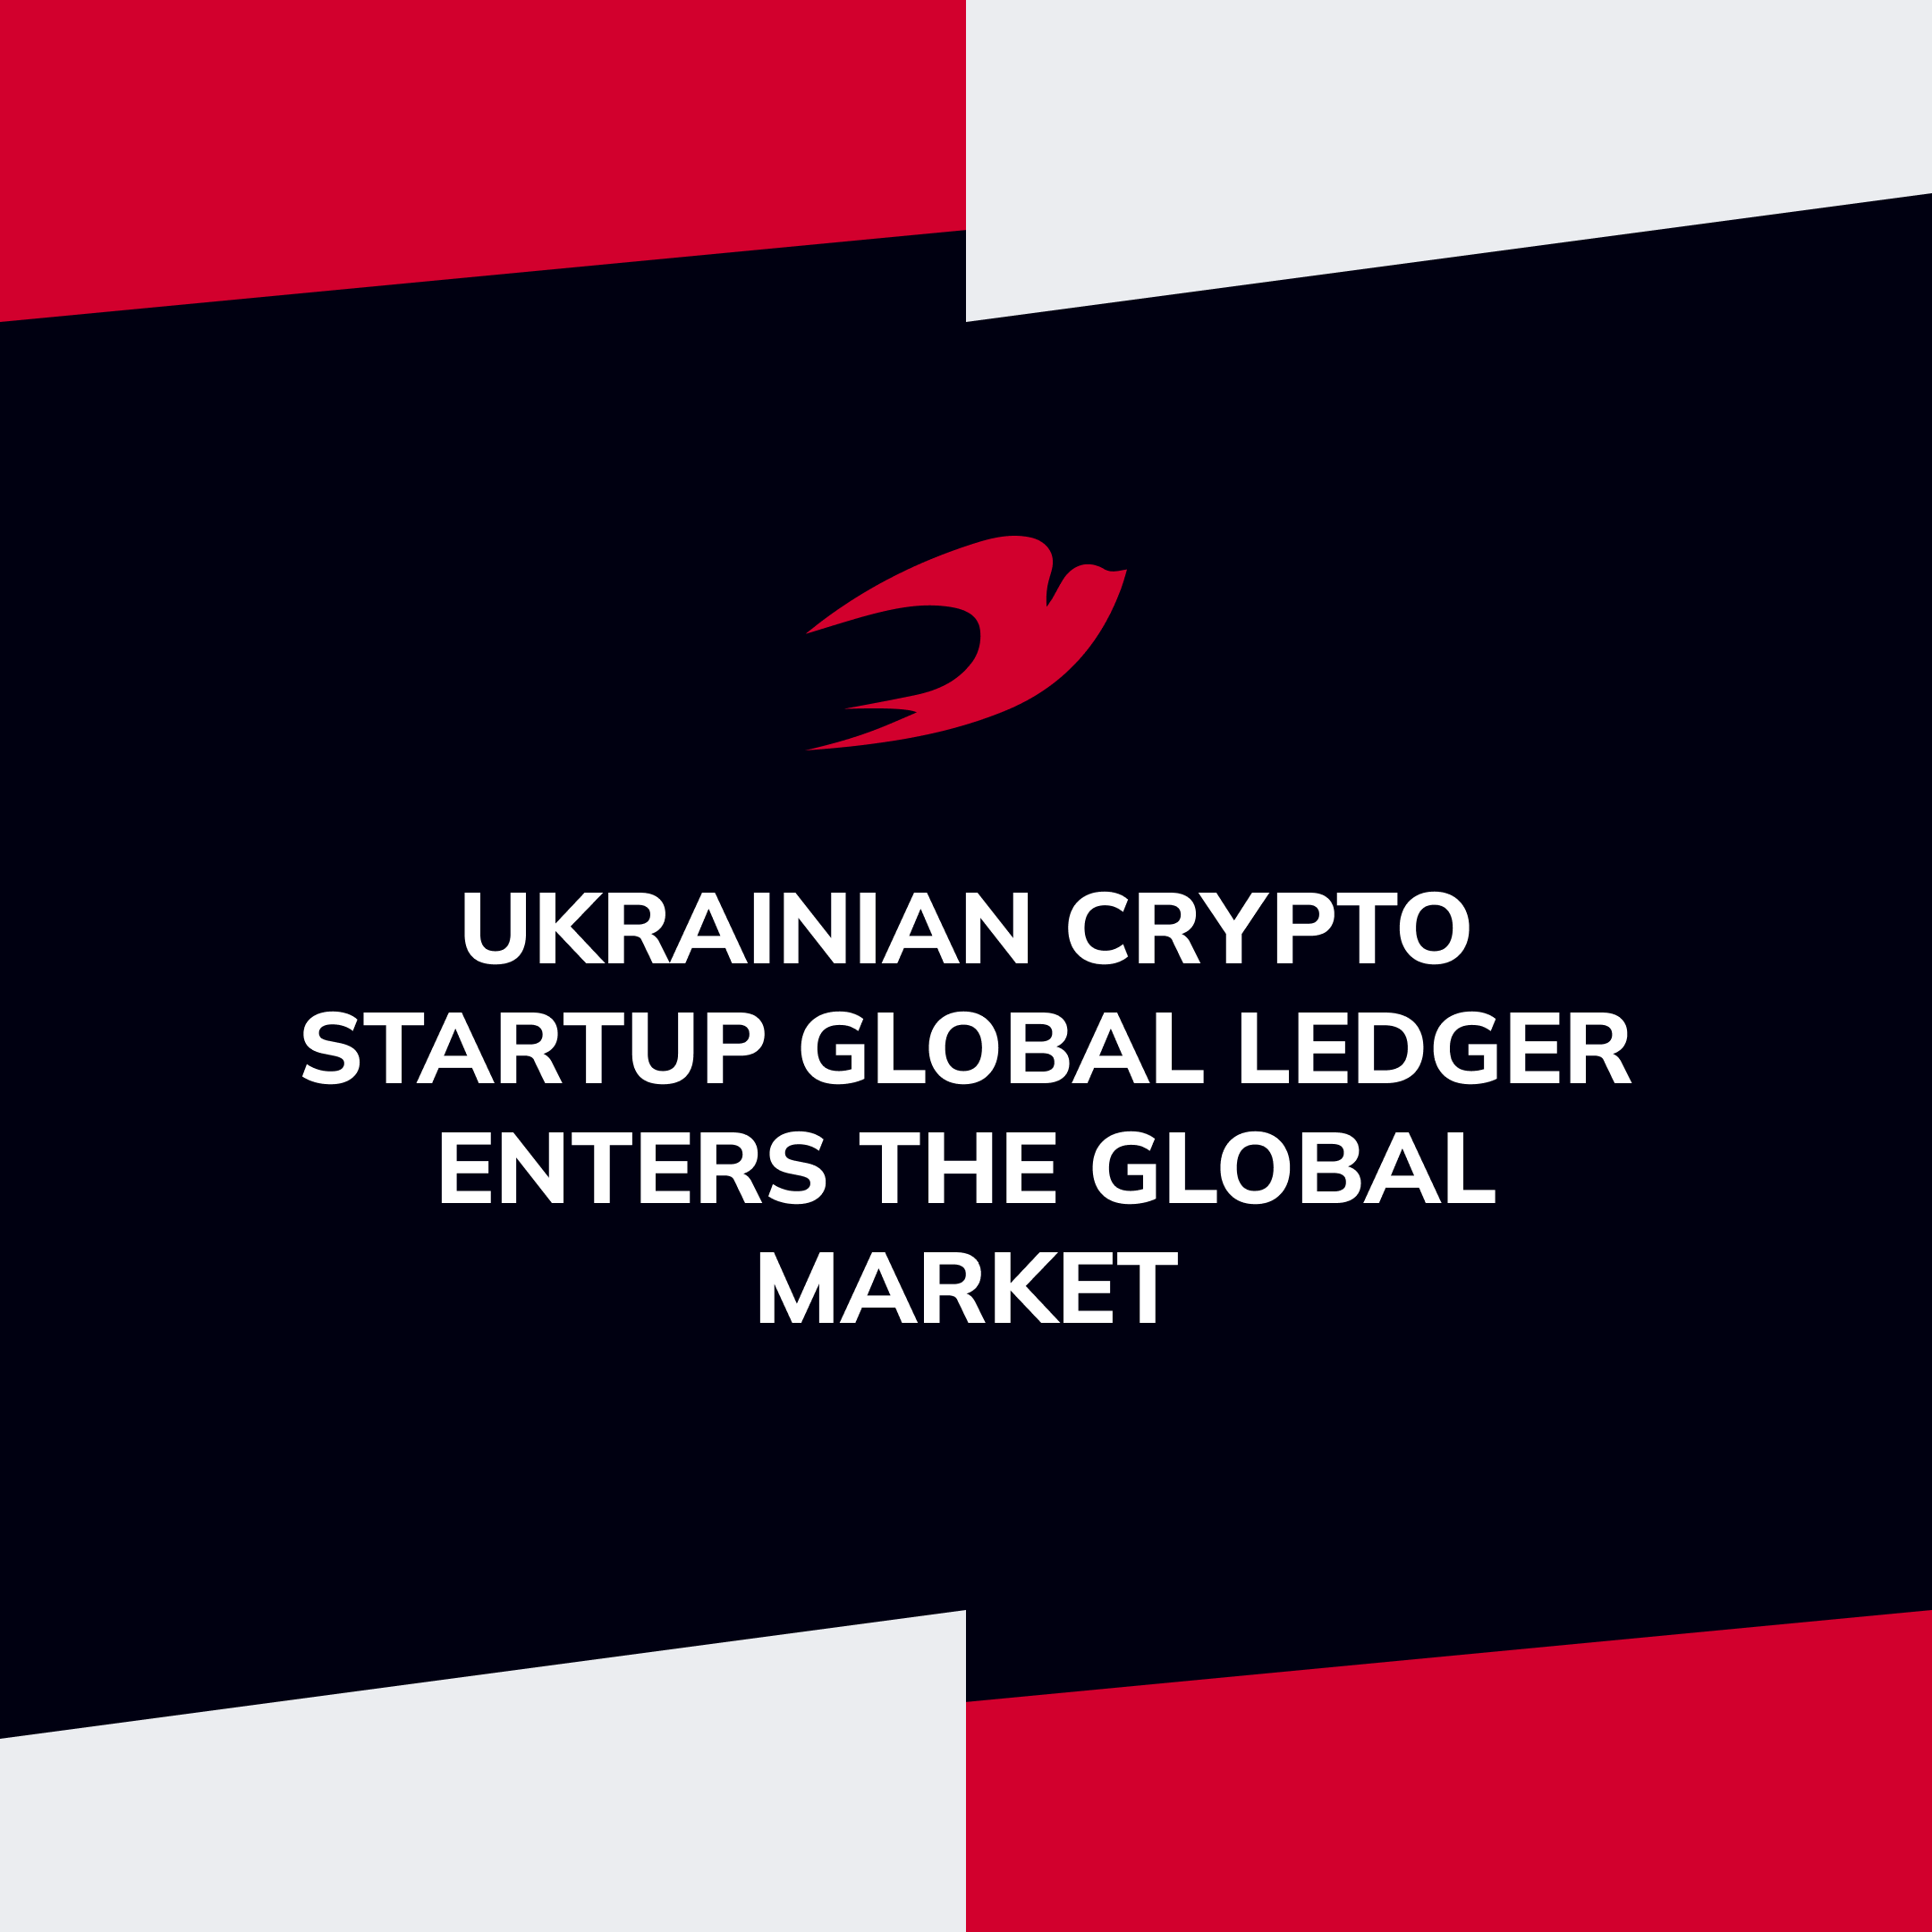 Ukrainian Crypto Startup Global Ledger Enters the Global Market